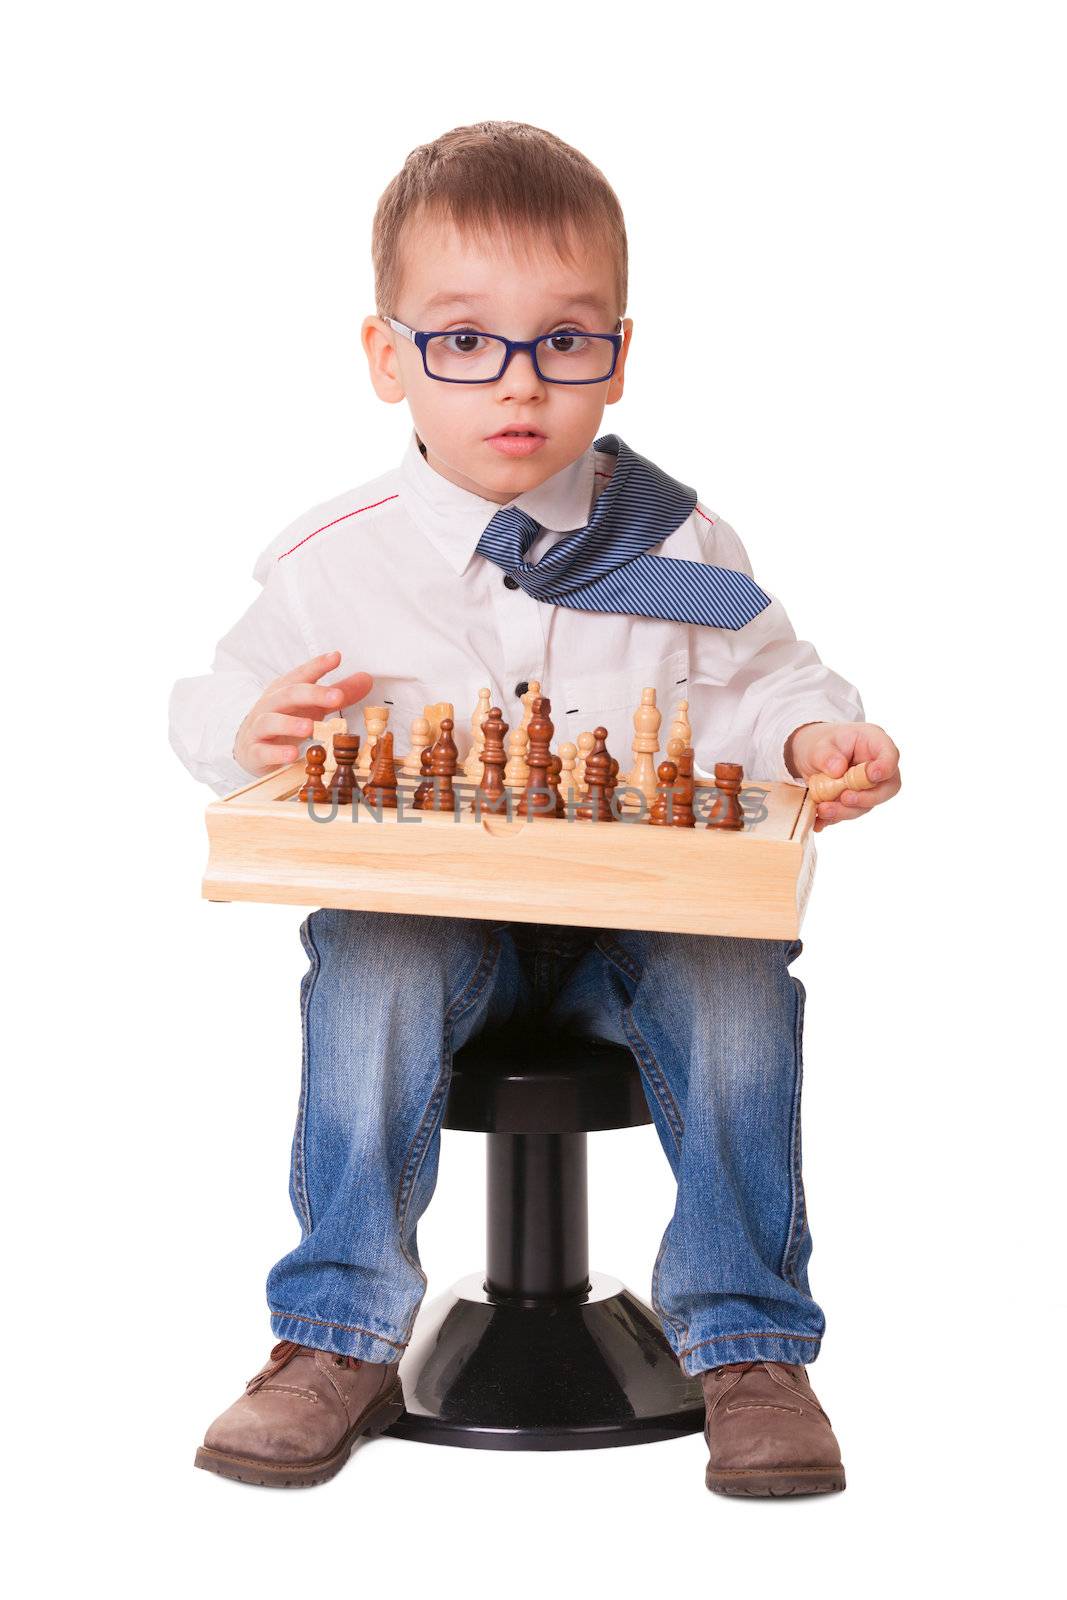 Serious child playing chess by iryna_rasko